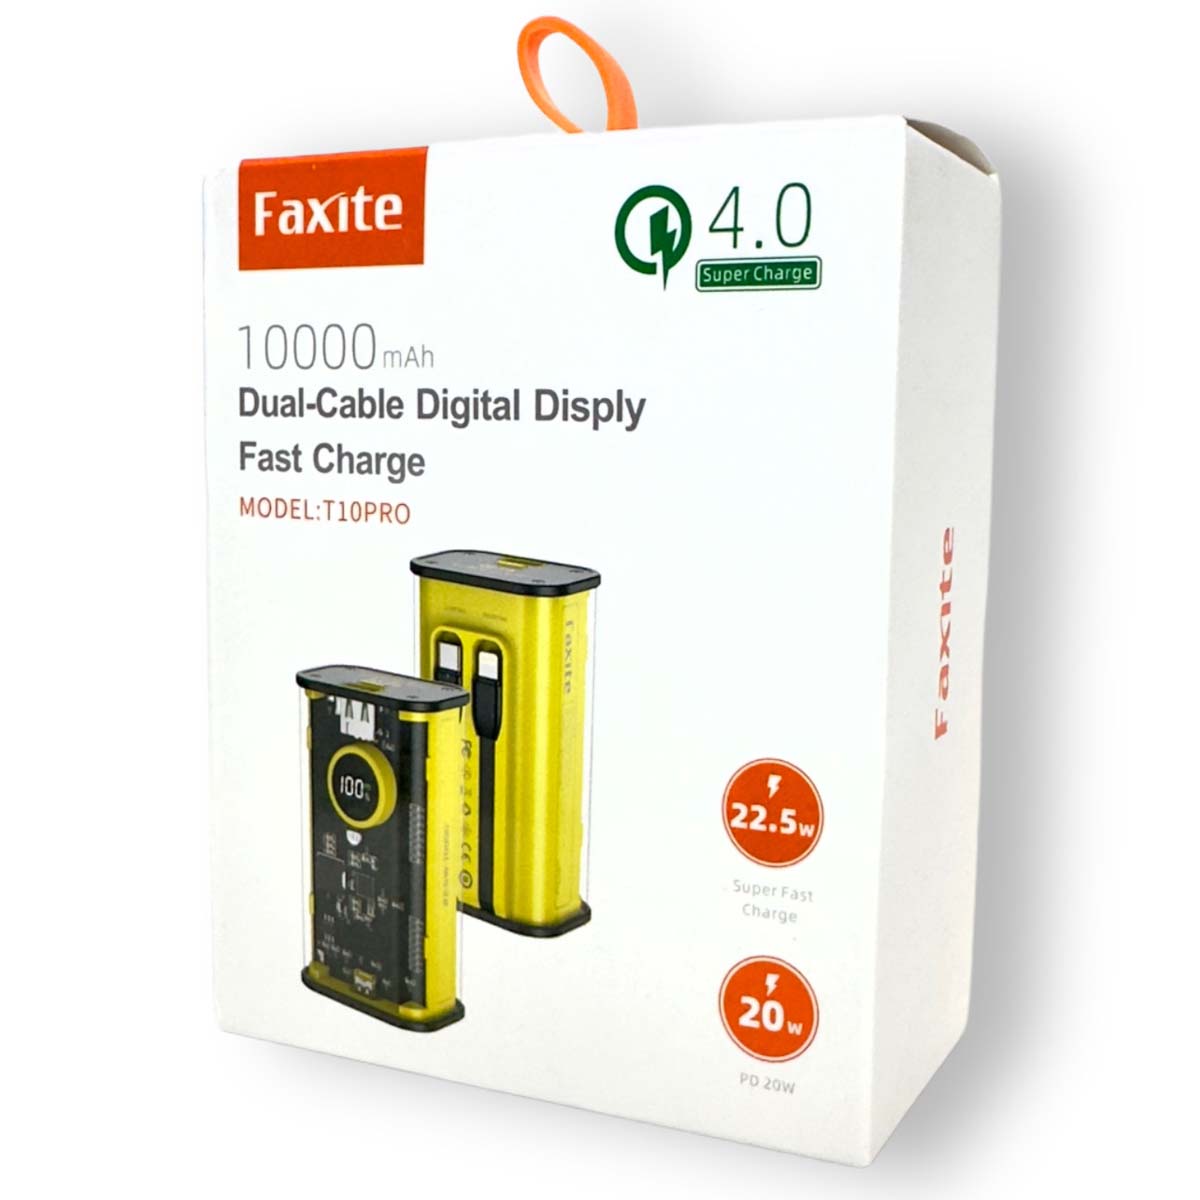 Faxite 10000 mAh 22.5w Fast Charging, Digital Display, Dual Cable Powerbank